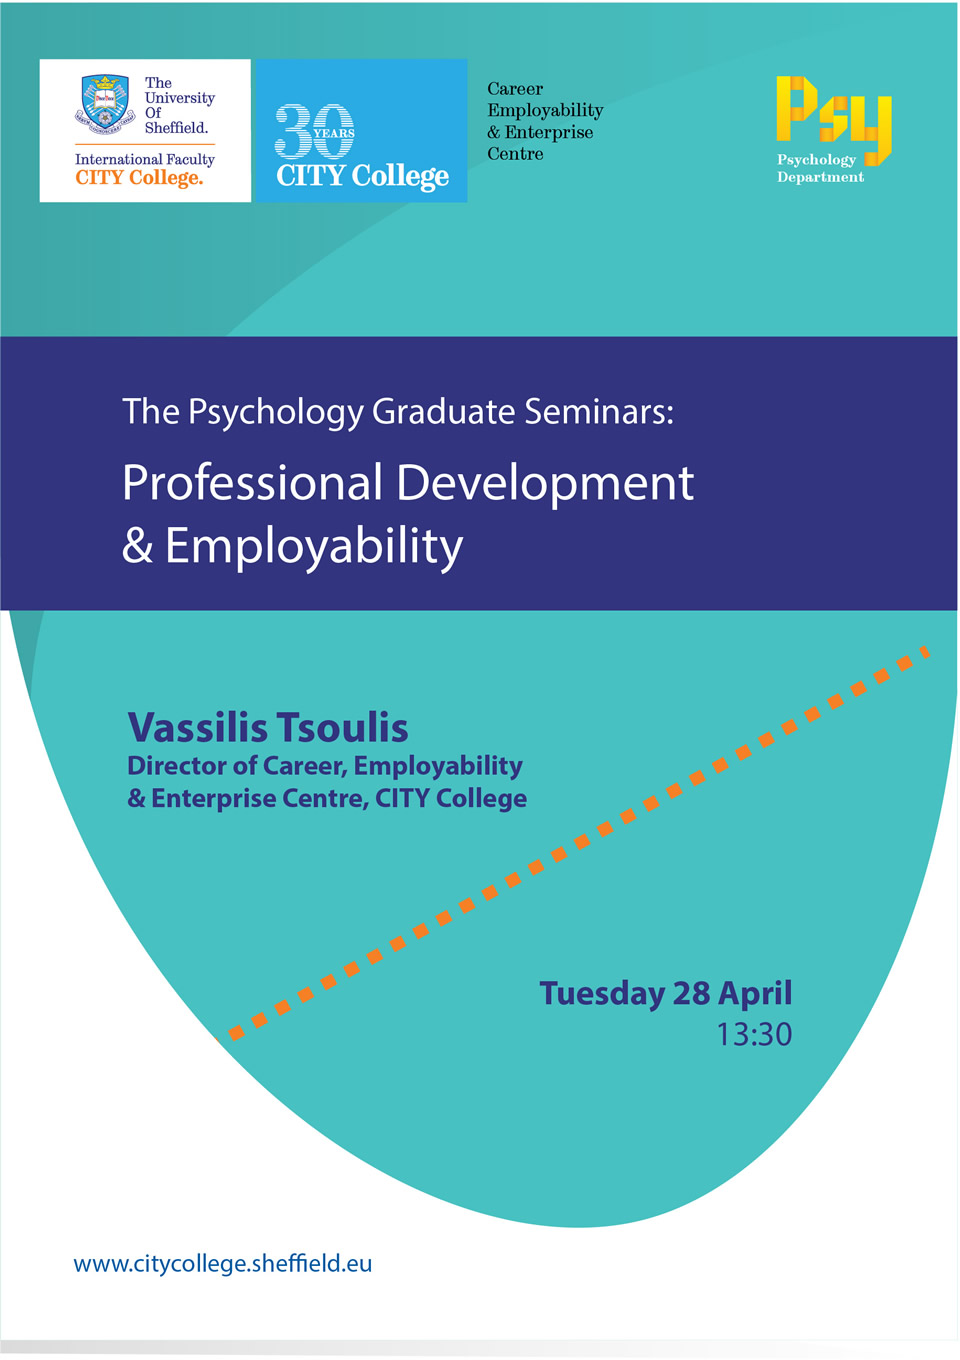 Psychology Graduate Seminars: Professional Development & Employability by CITY College Psychology Department